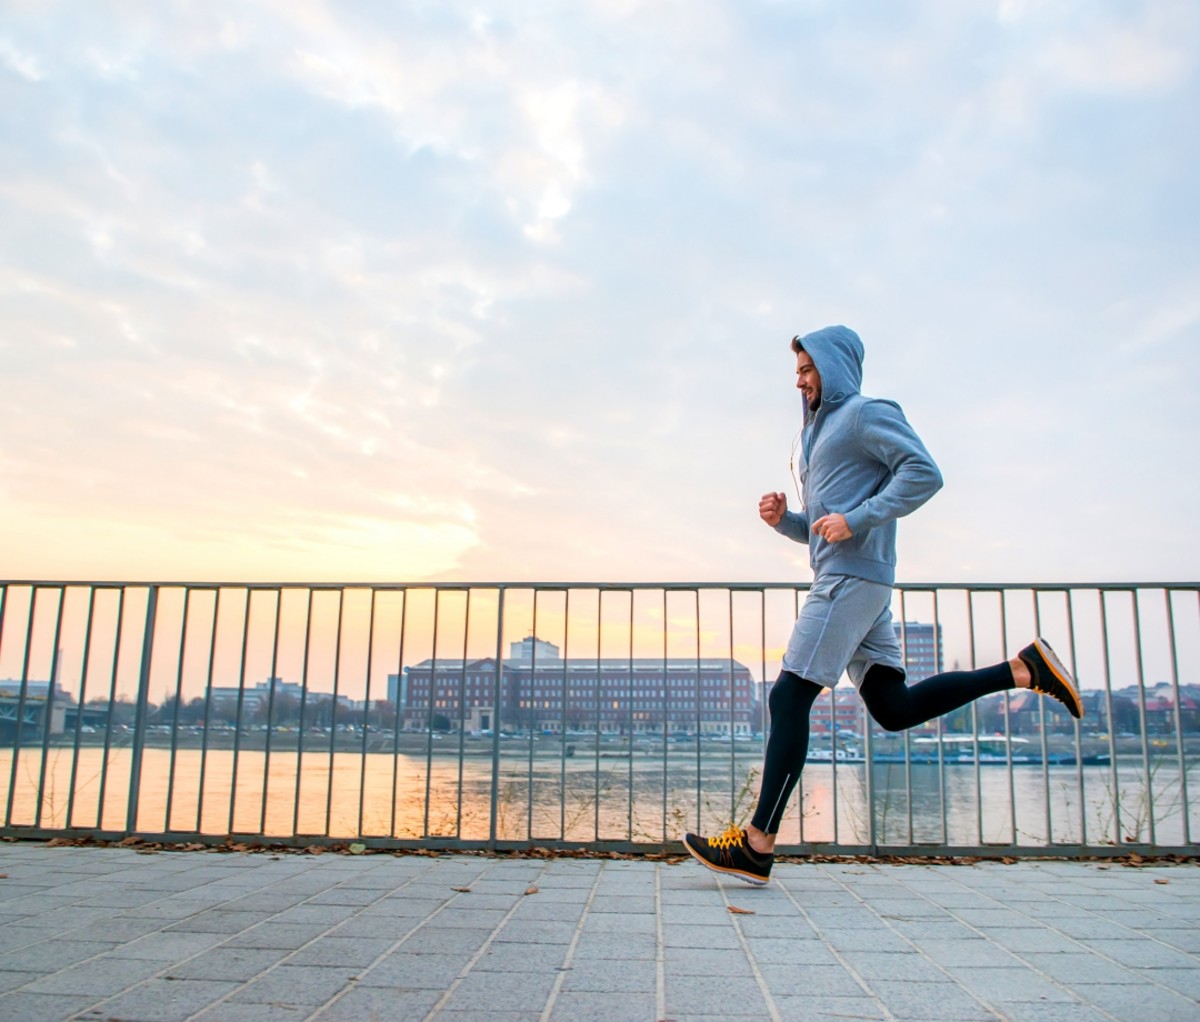 Benefits of Jogging: 7 Reasons You Should Go for a Jog